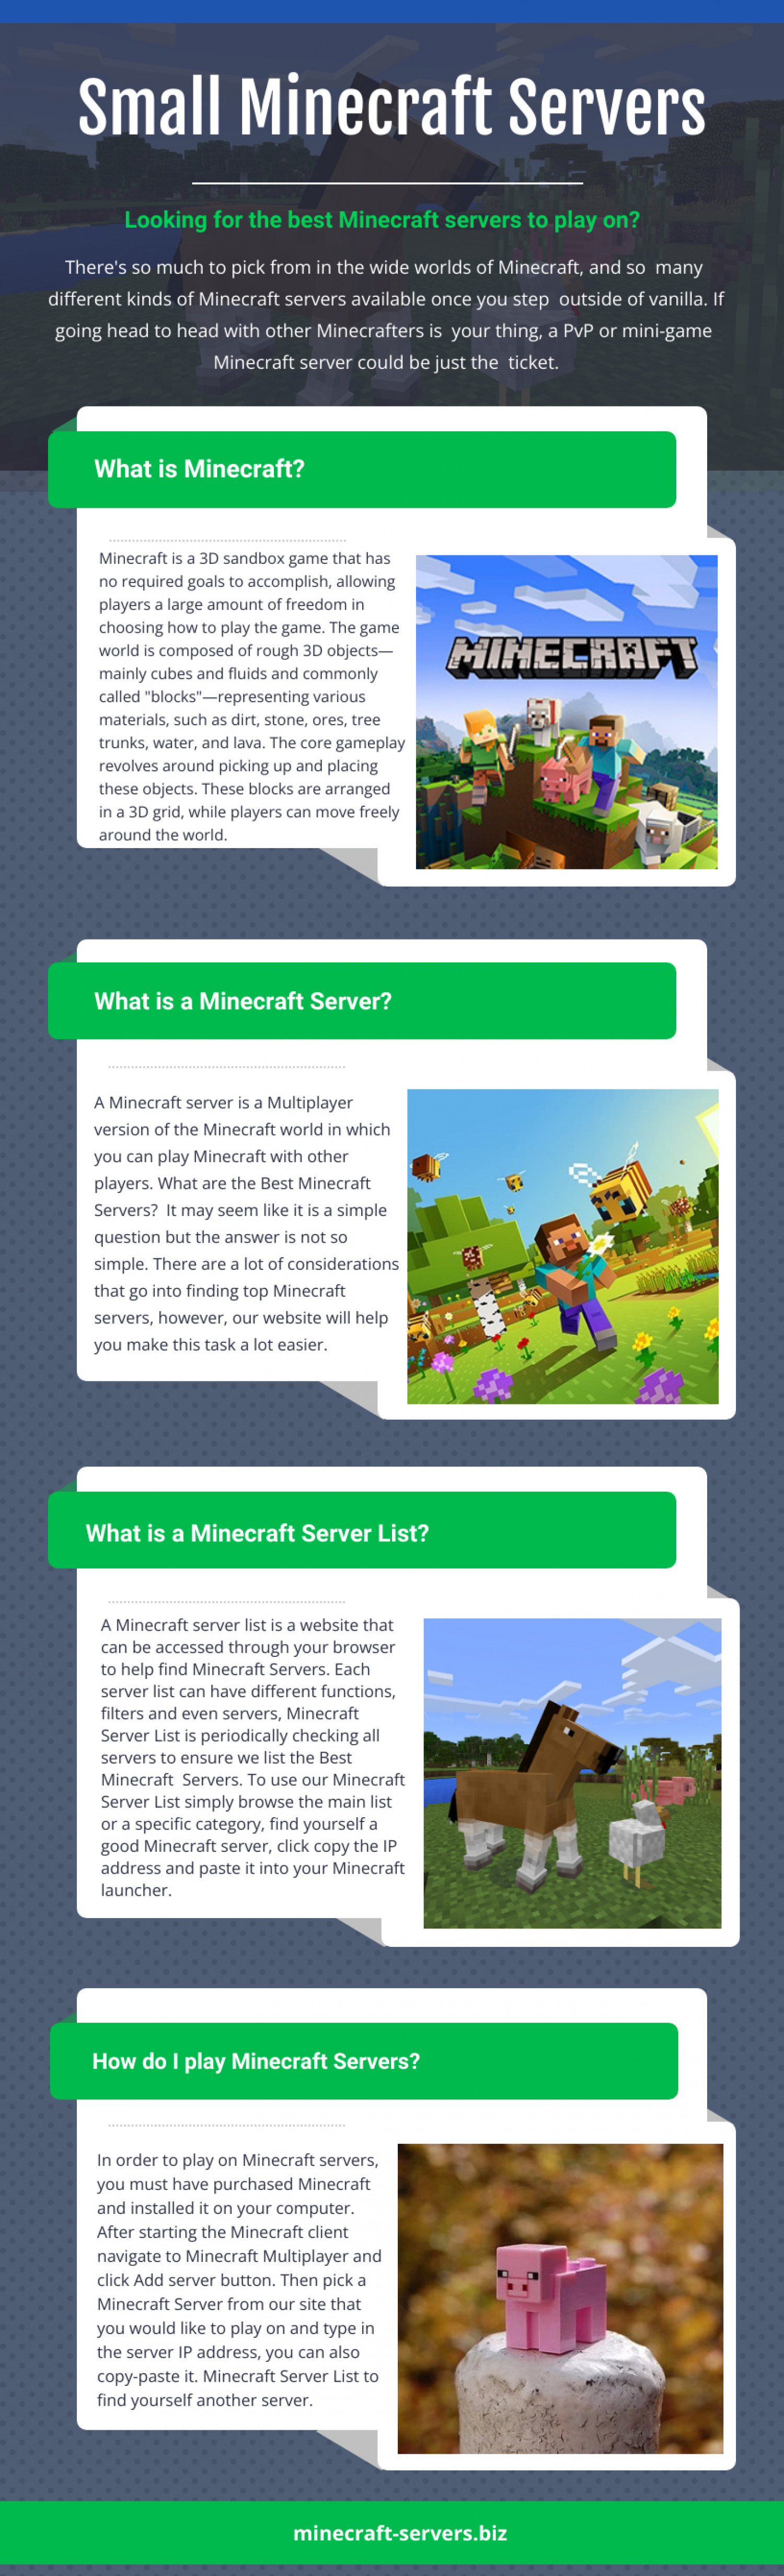 Small Minecraft Servers Infographic